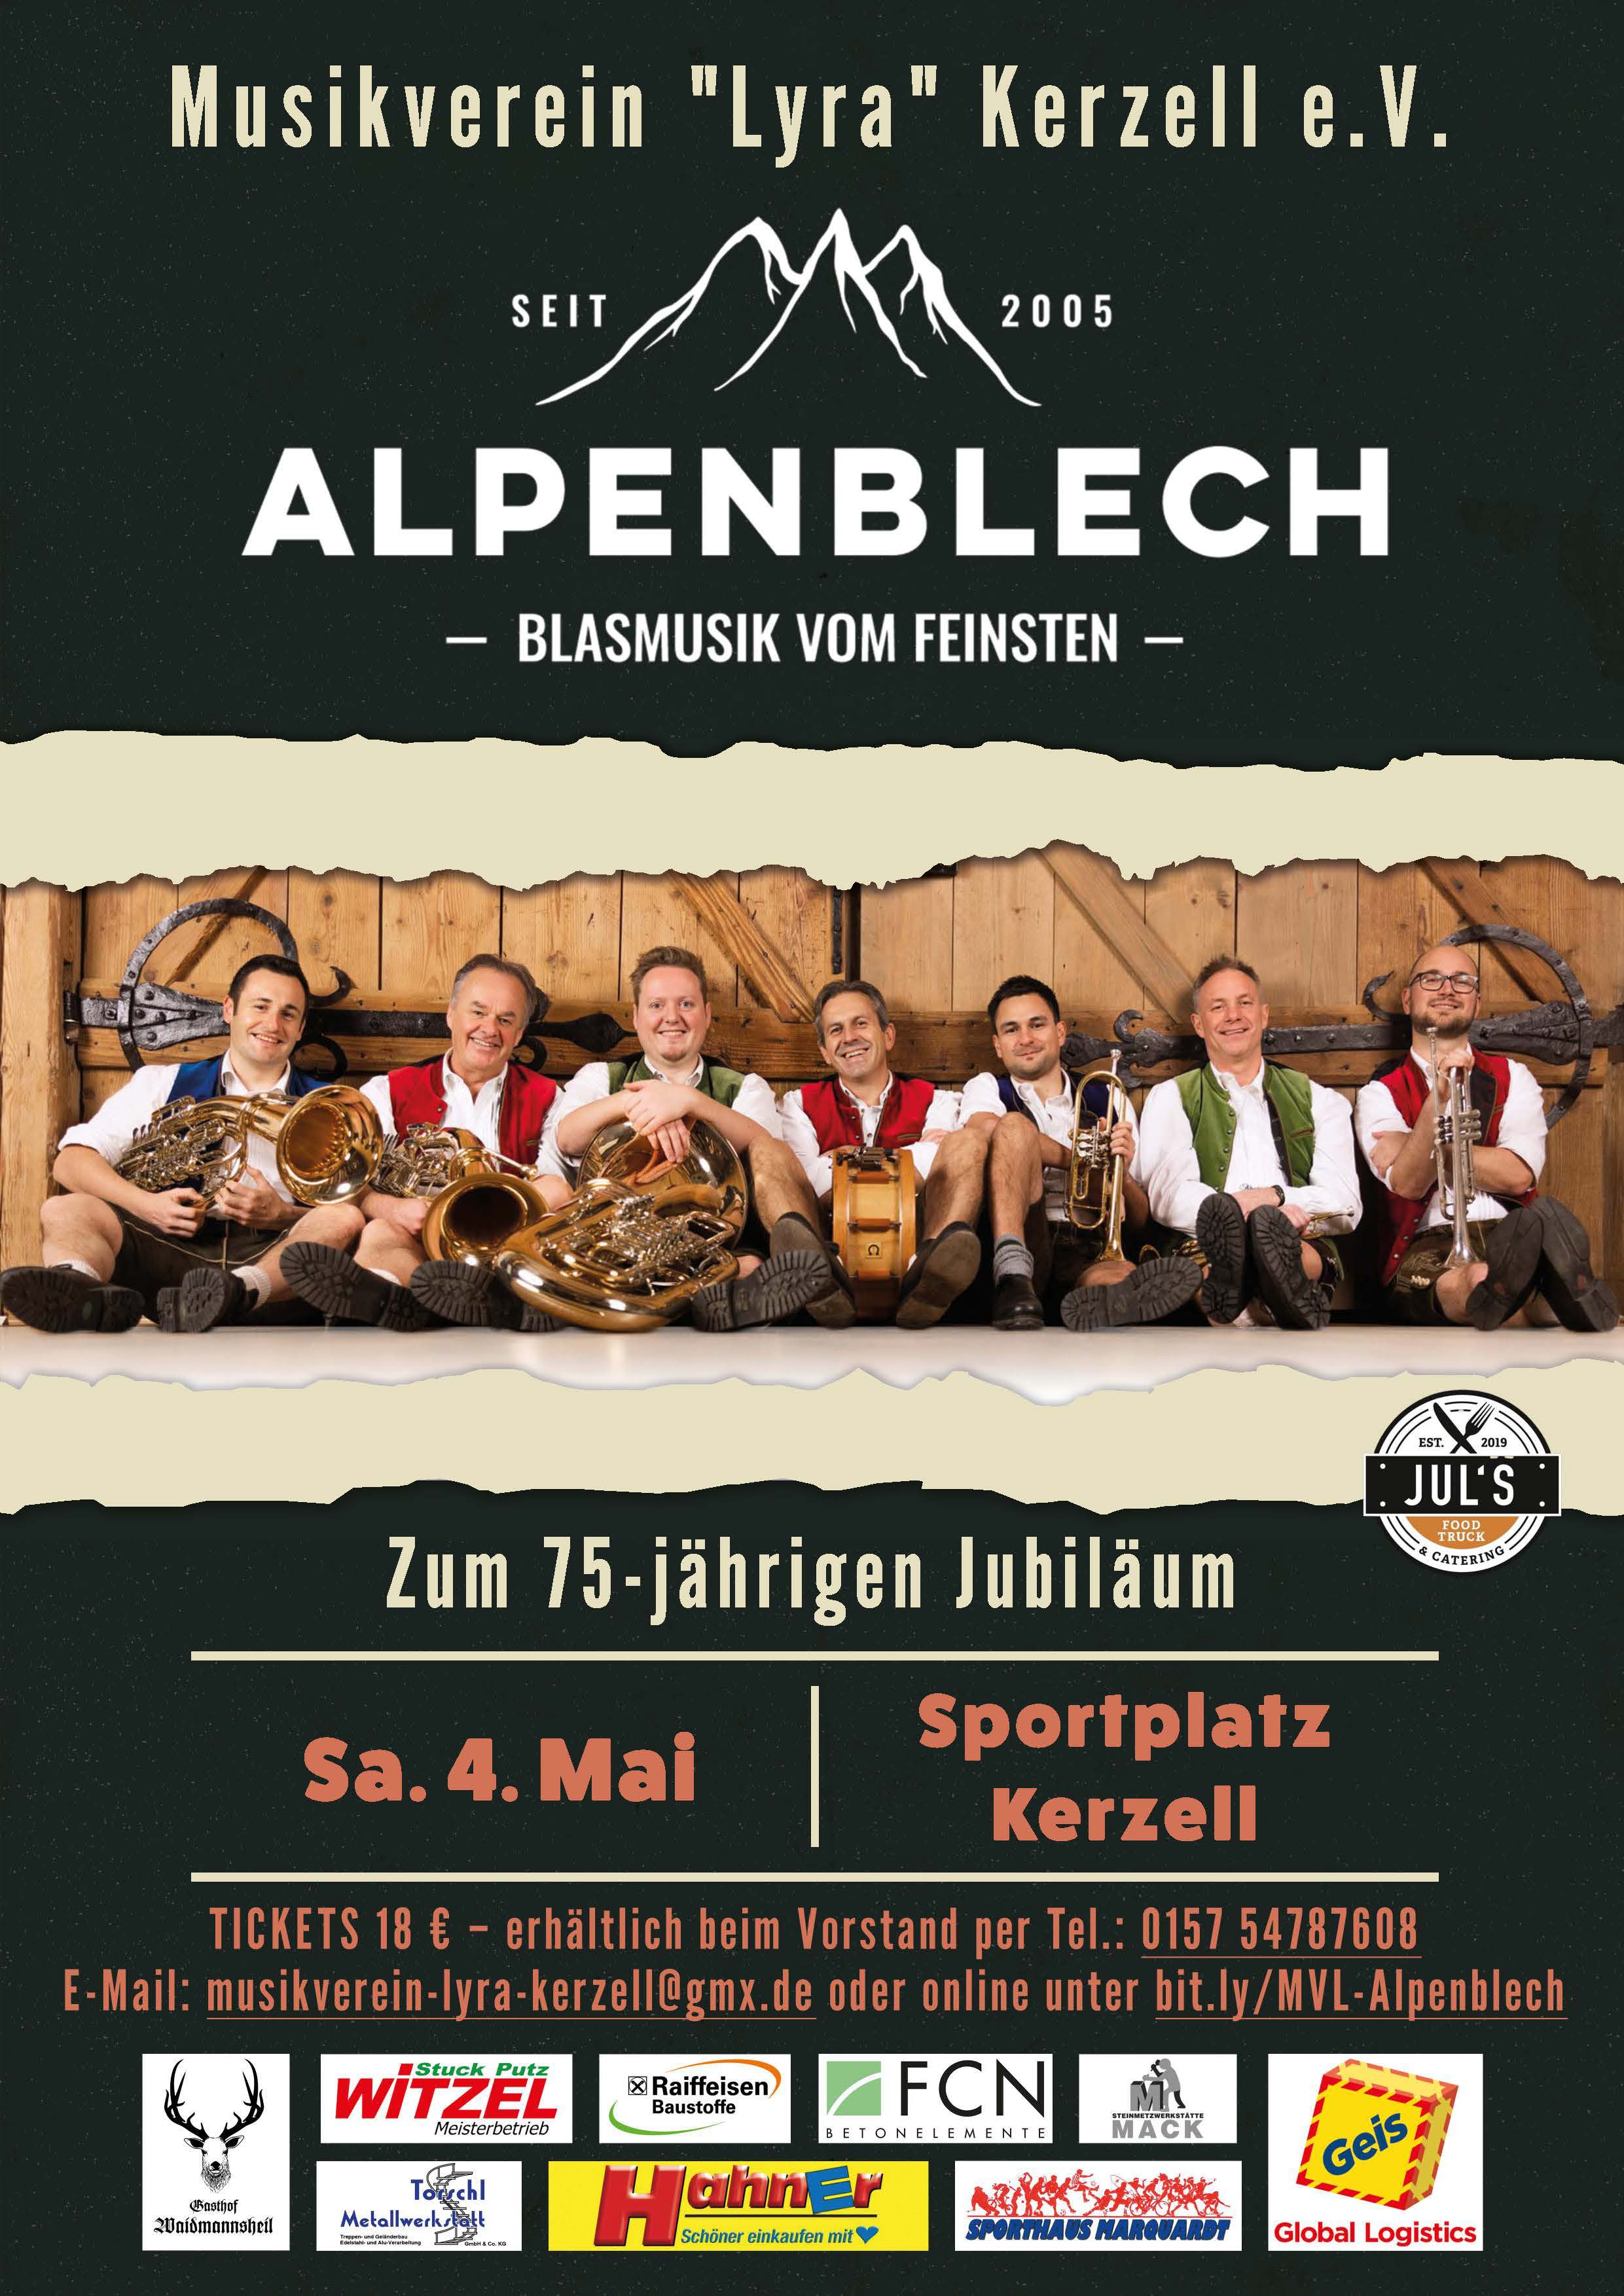 Alpenblech - Blasmusik vom Feinsten - Lyra Kerzell